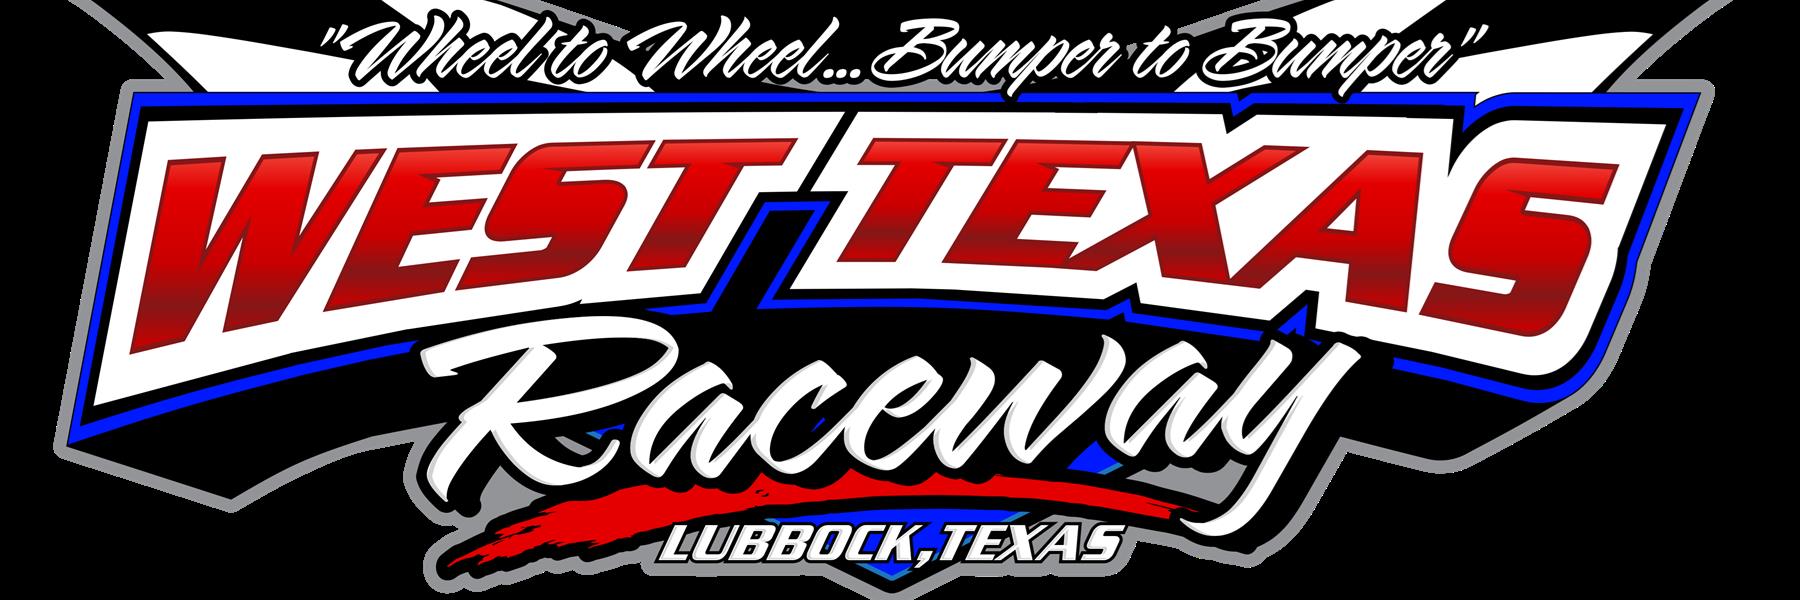 7/26/2019 - West Texas Raceway